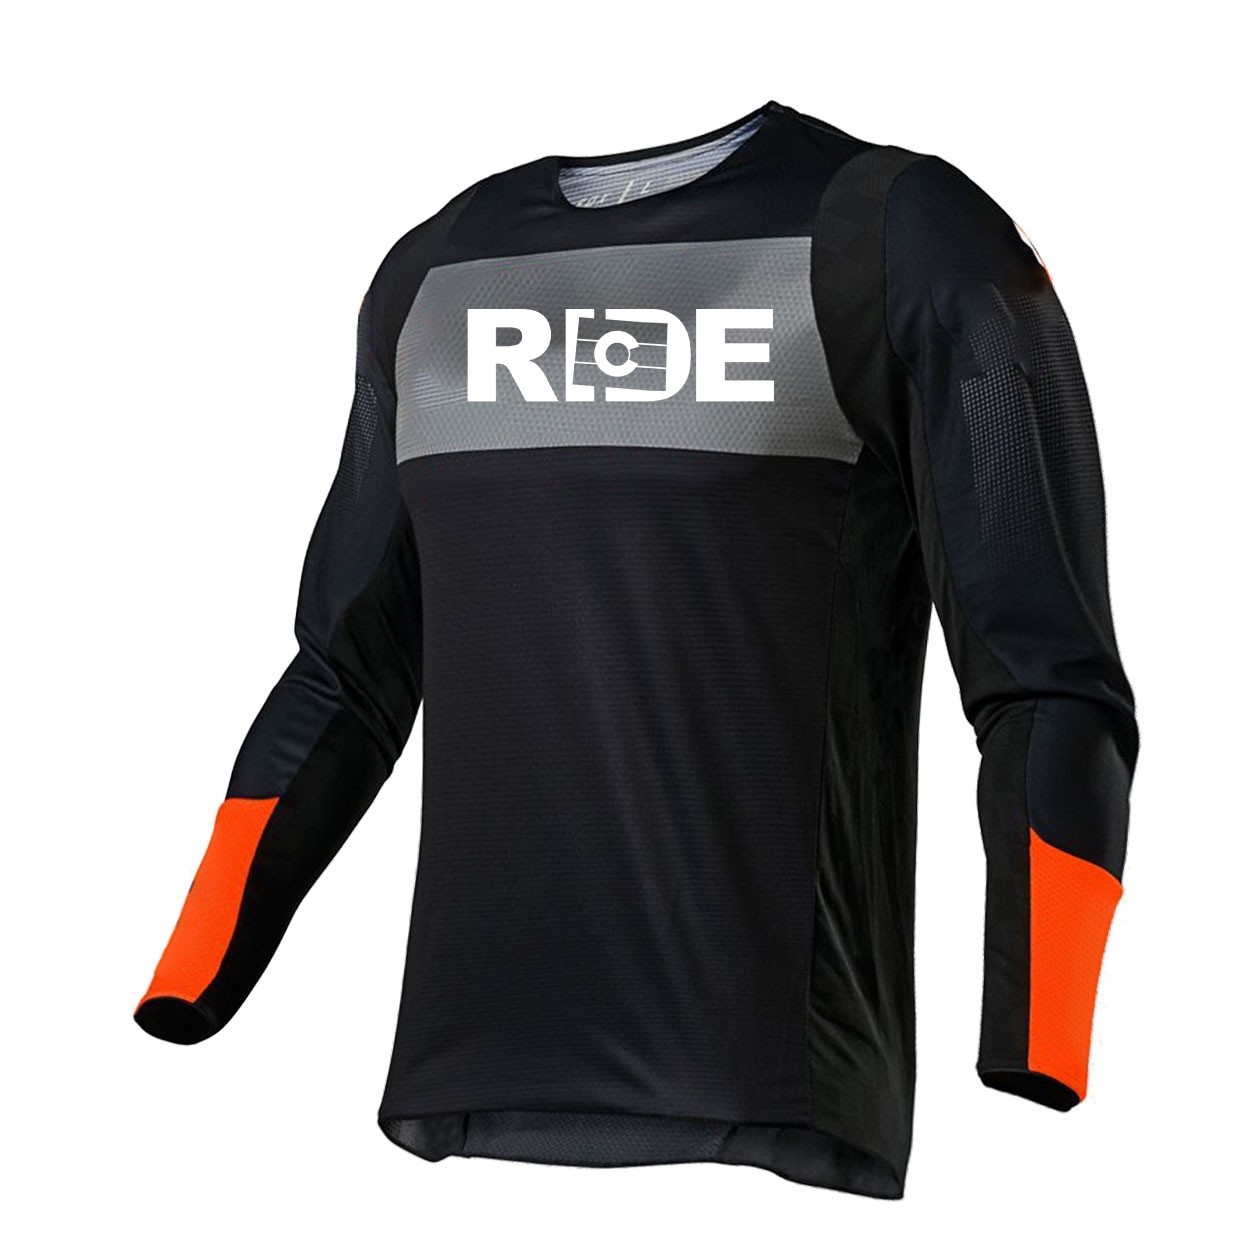 Ride Colorado Classic Performance Jersey Long Sleeve Shirt Black/Gray/Orange